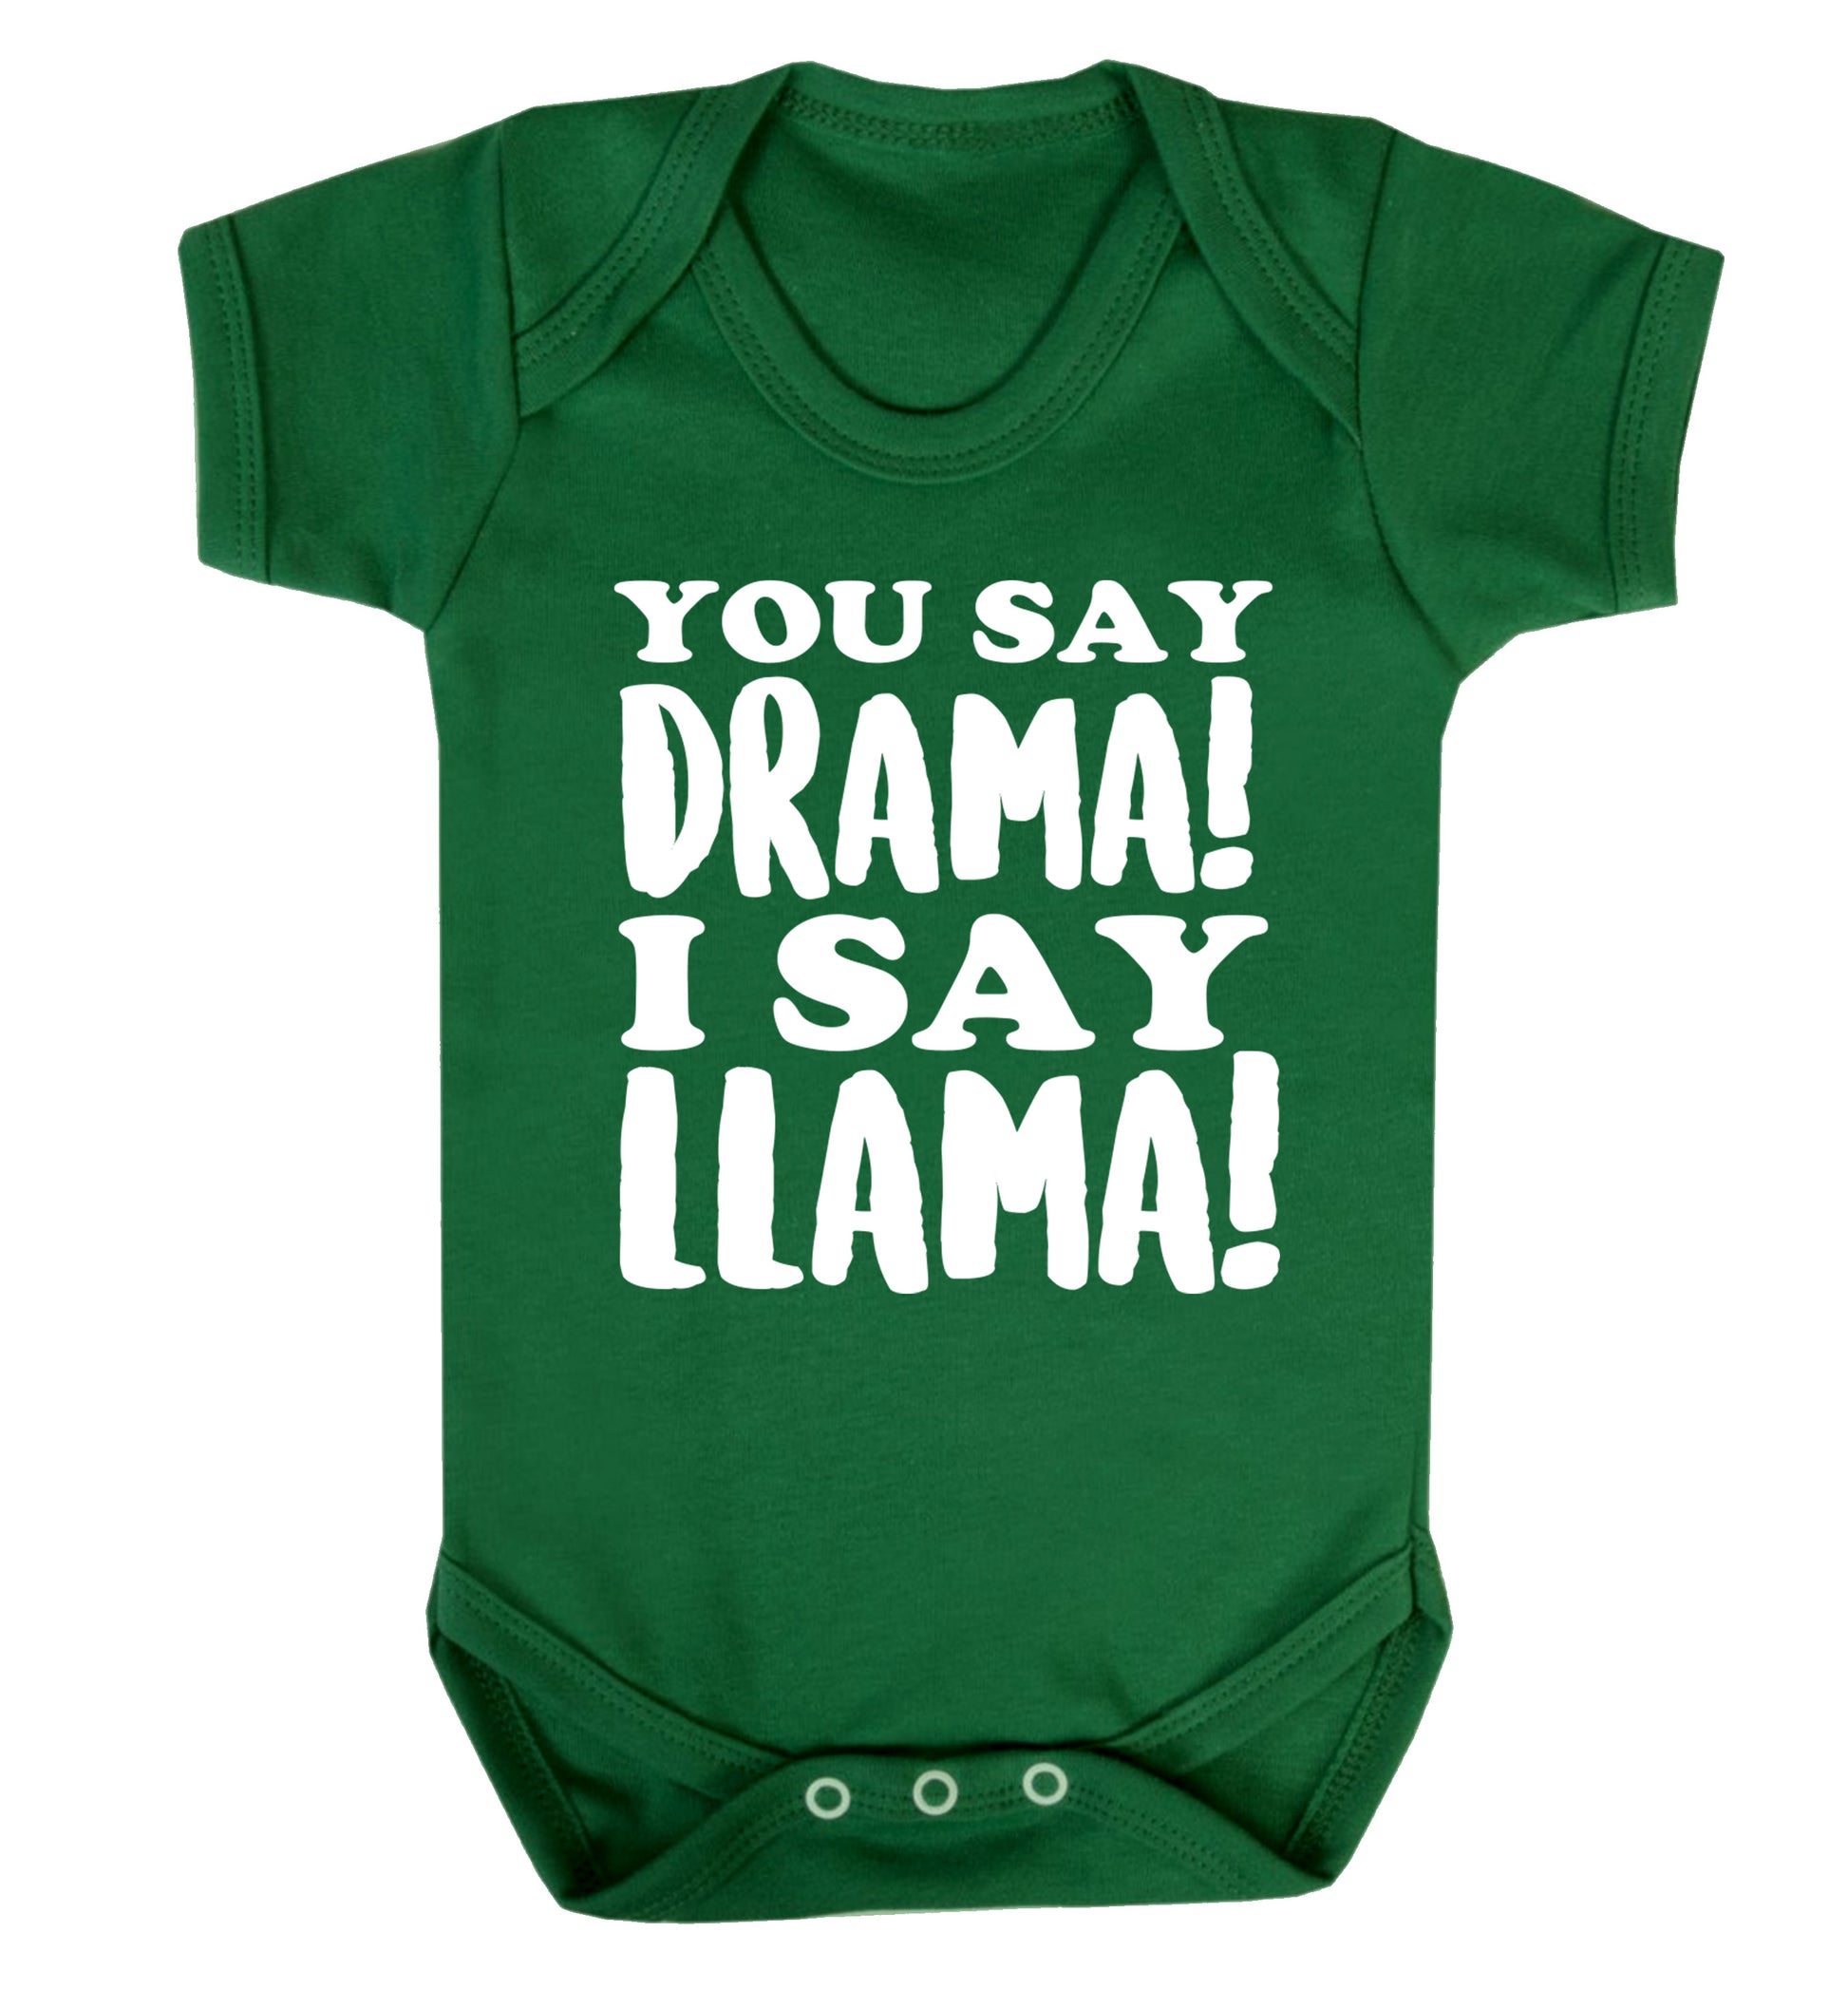 You say drama I say llama! Baby Vest green 18-24 months